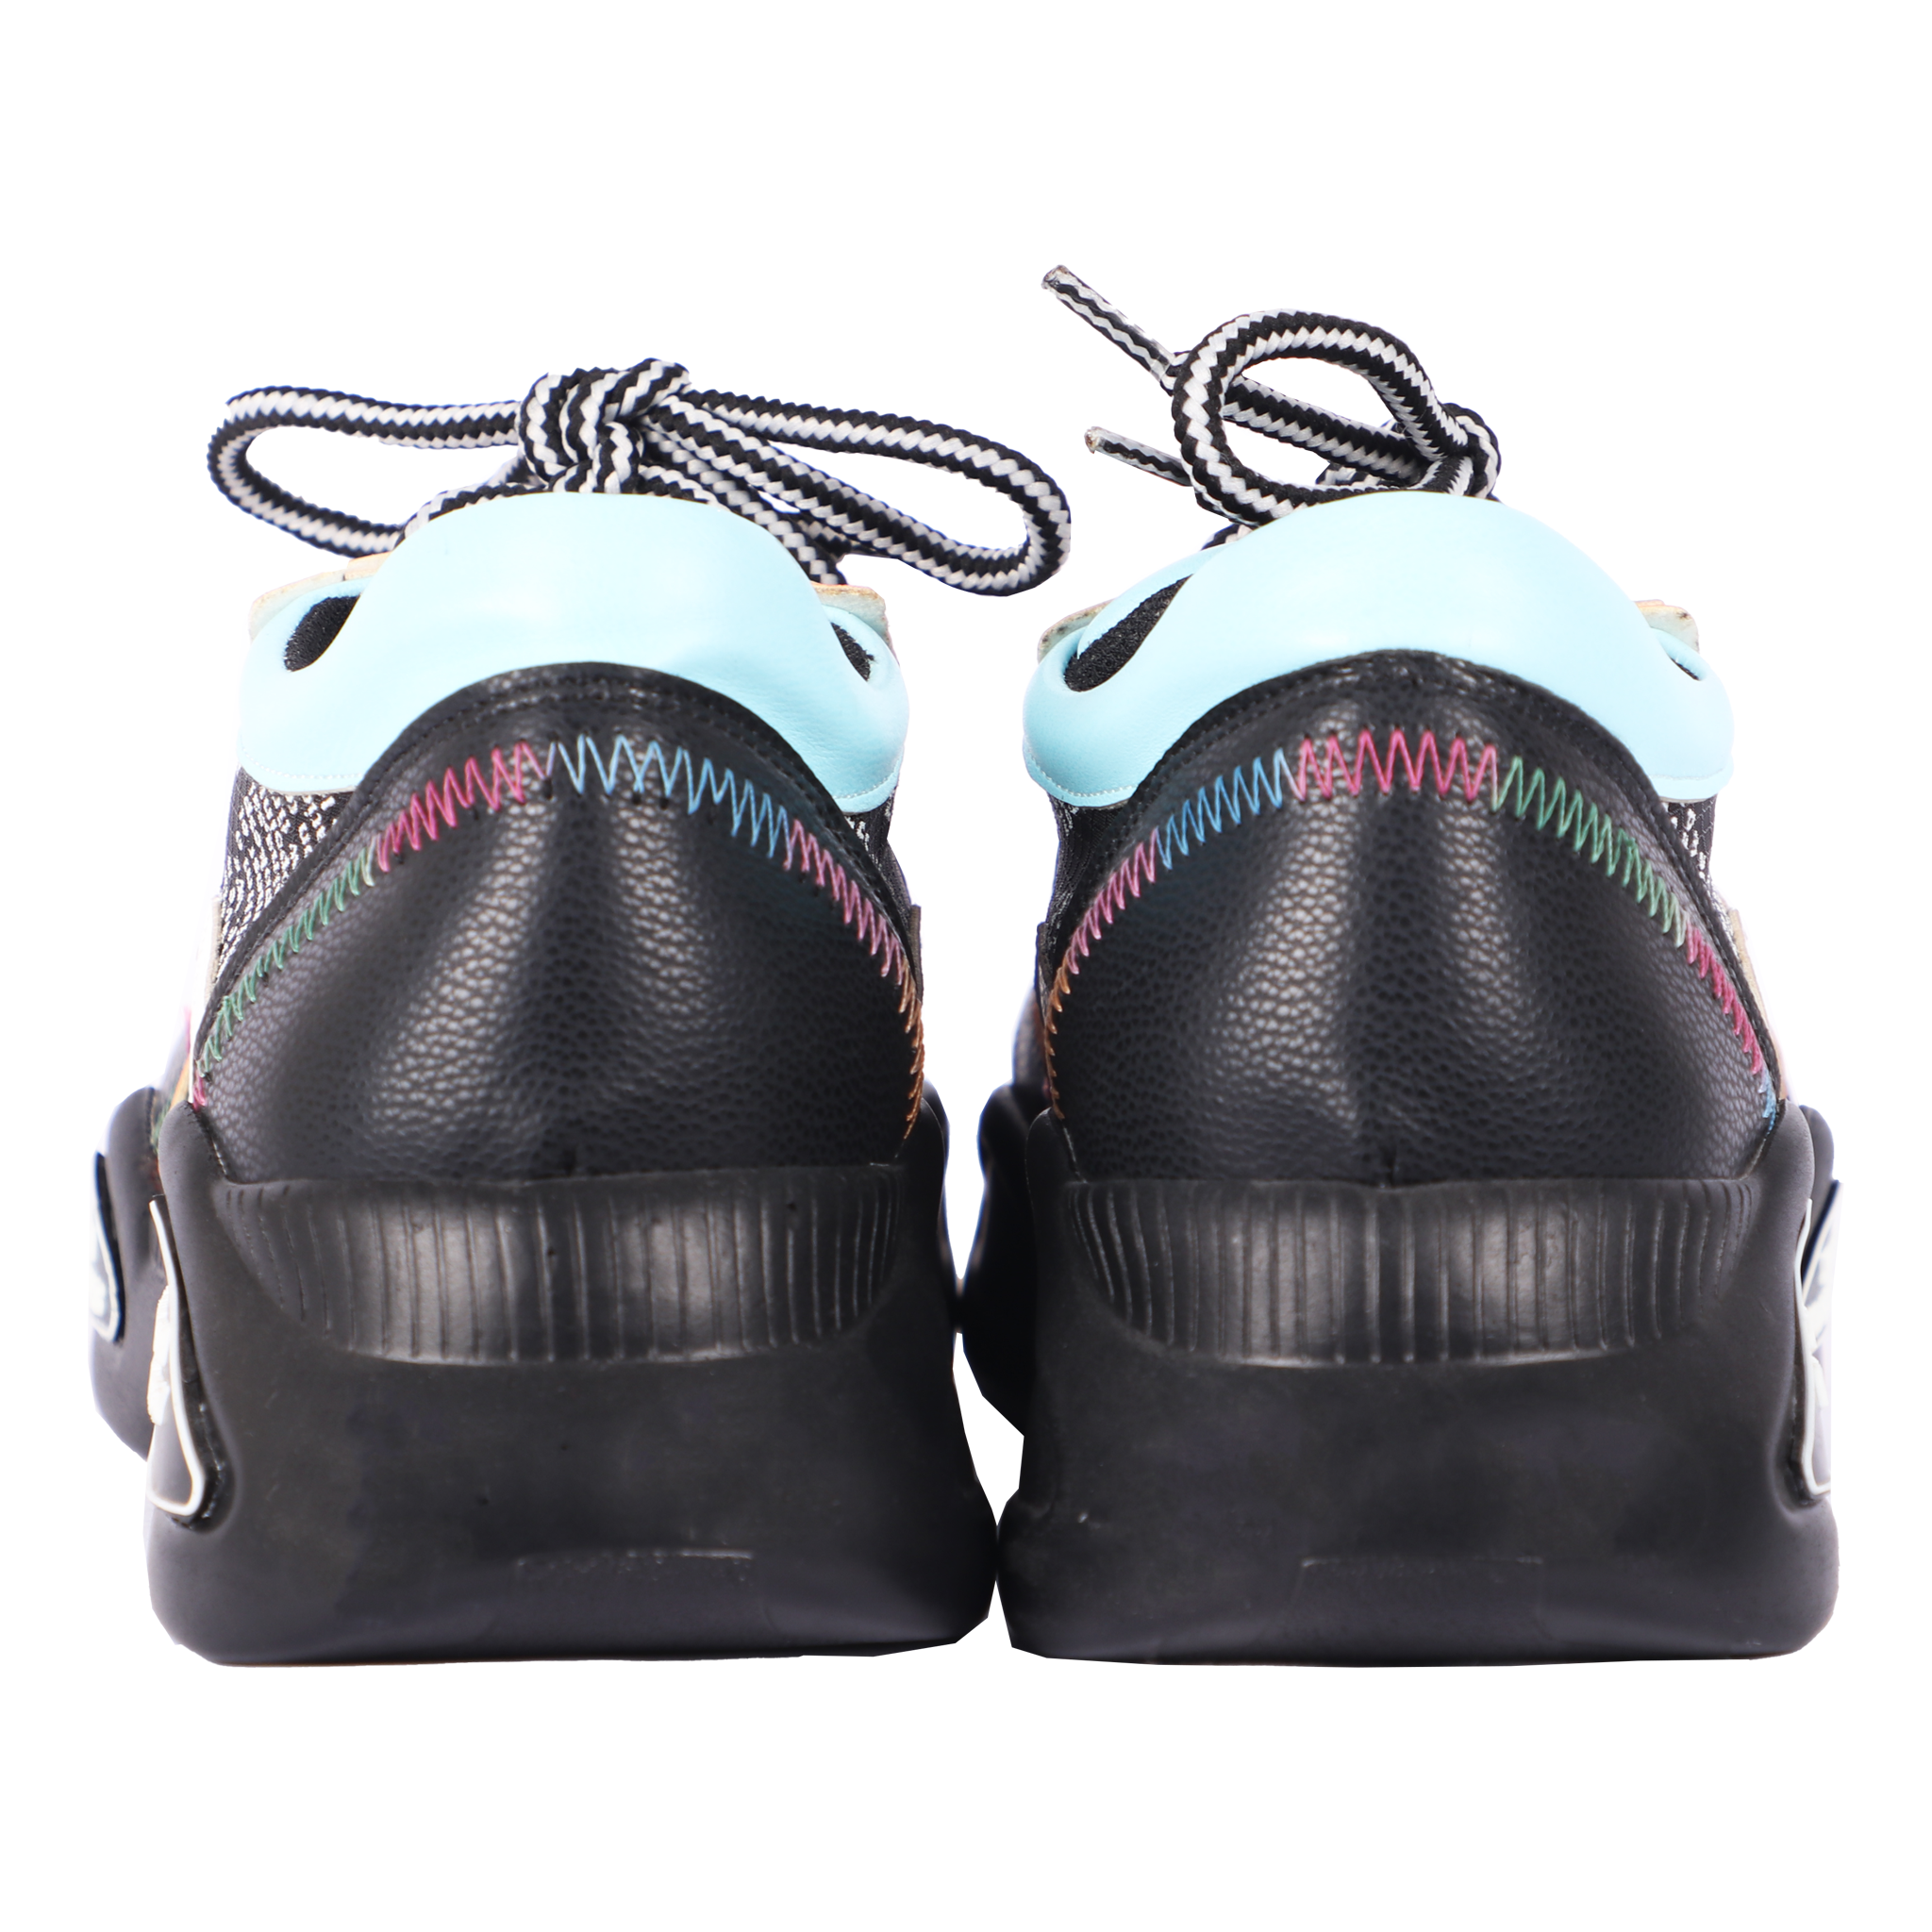 109 91-Vigolli Ladies Shoes